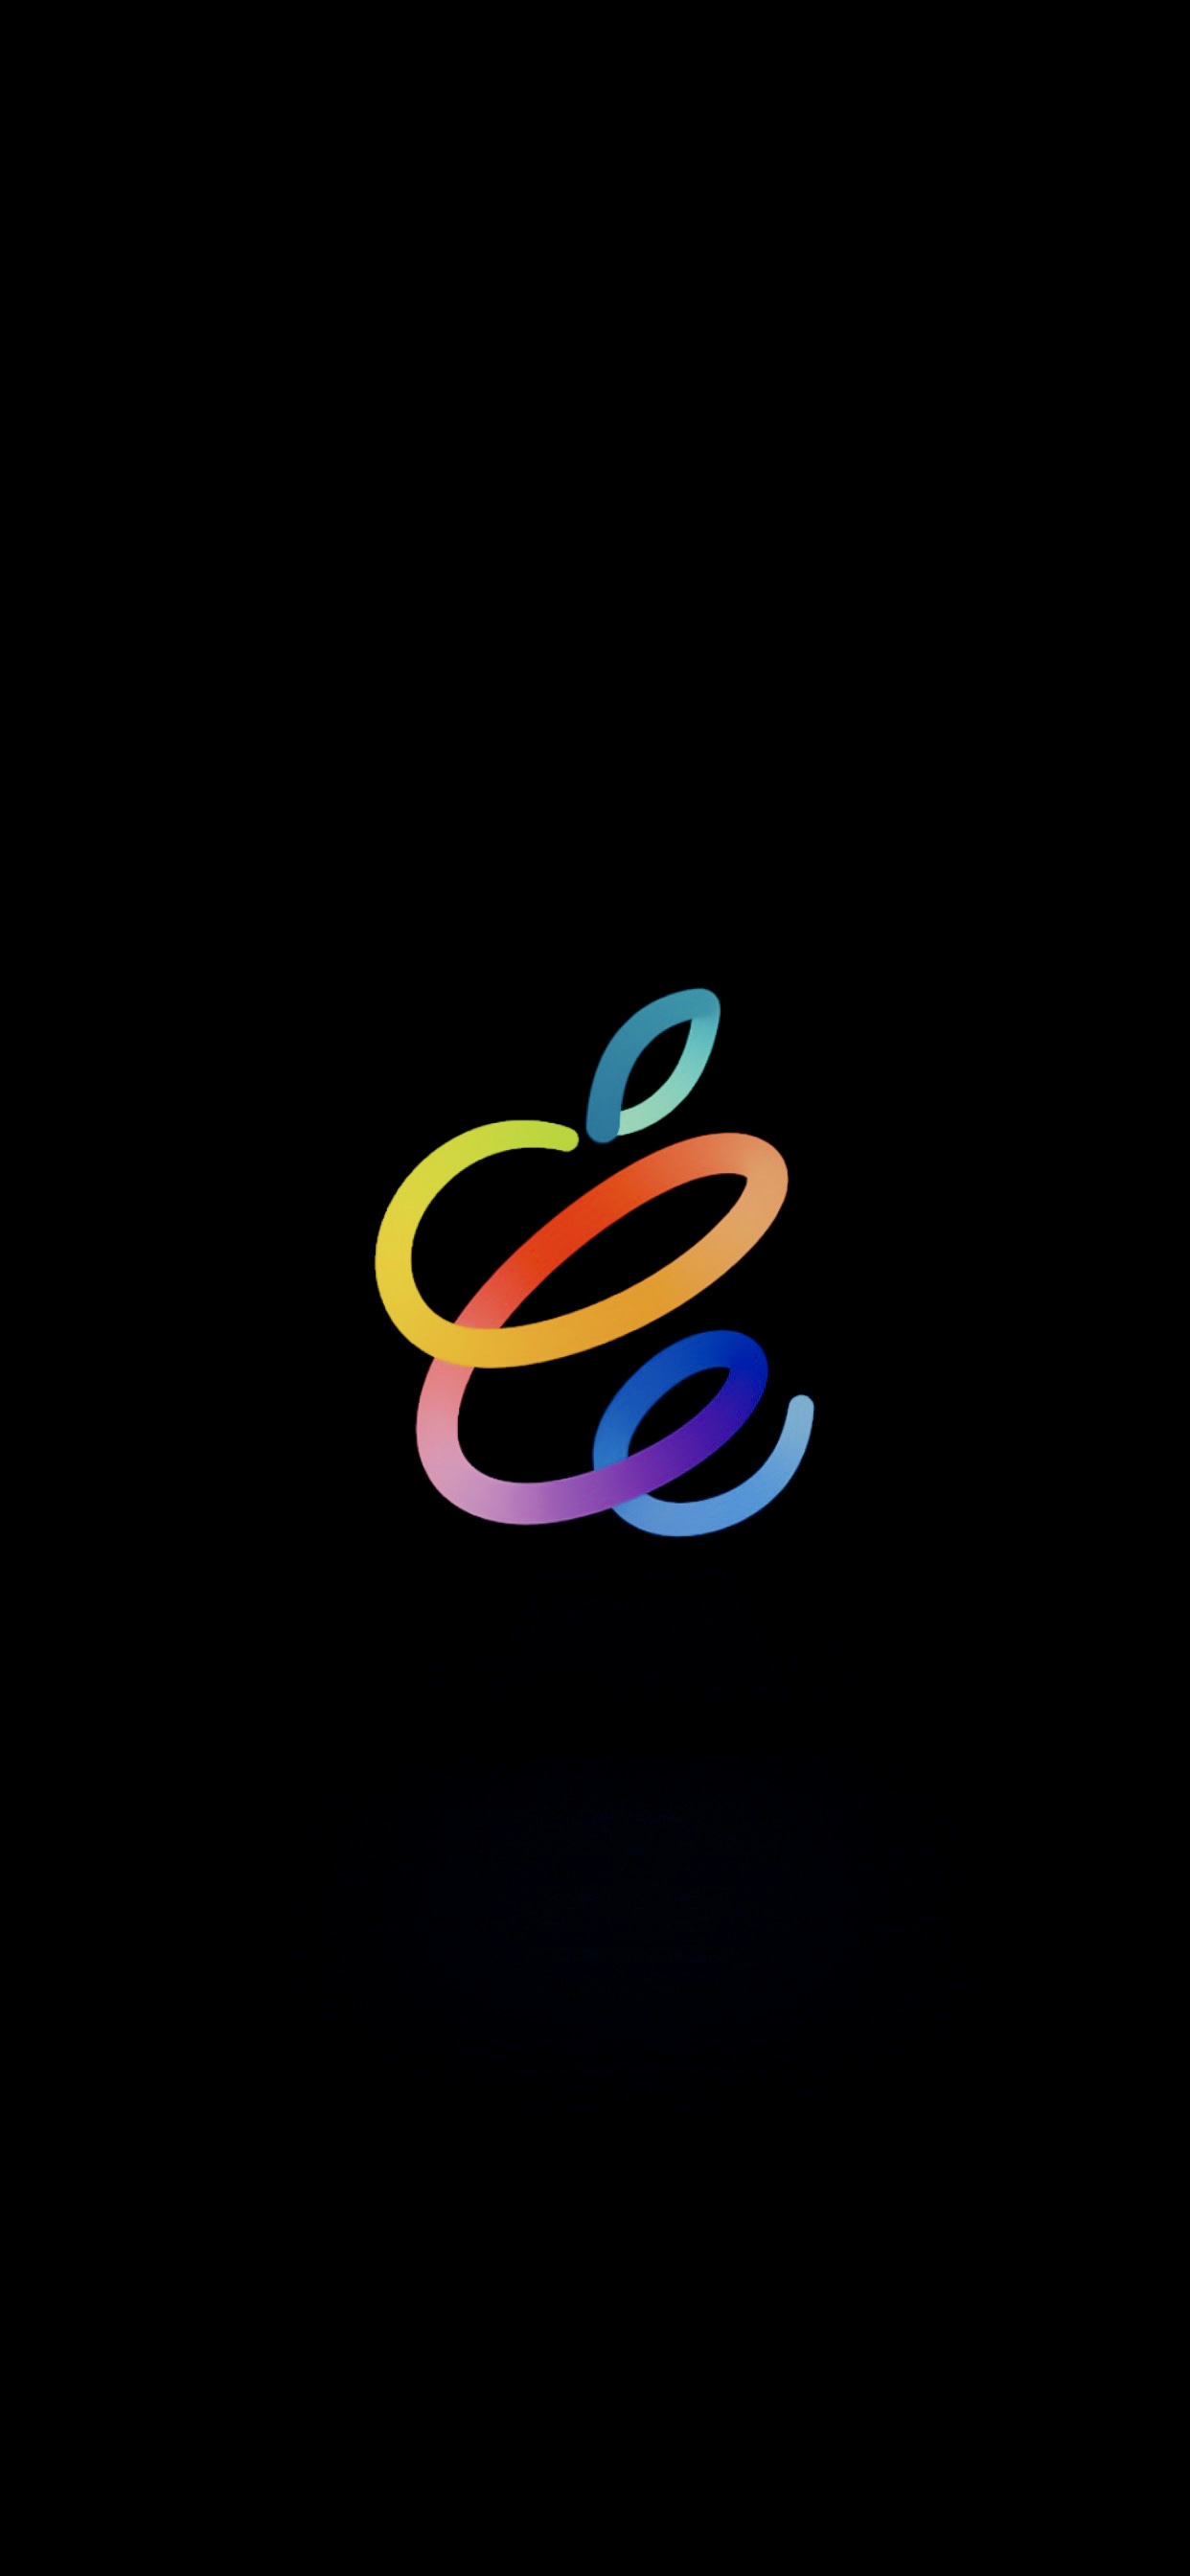 Apple 'Spring Loaded' event wallpaper